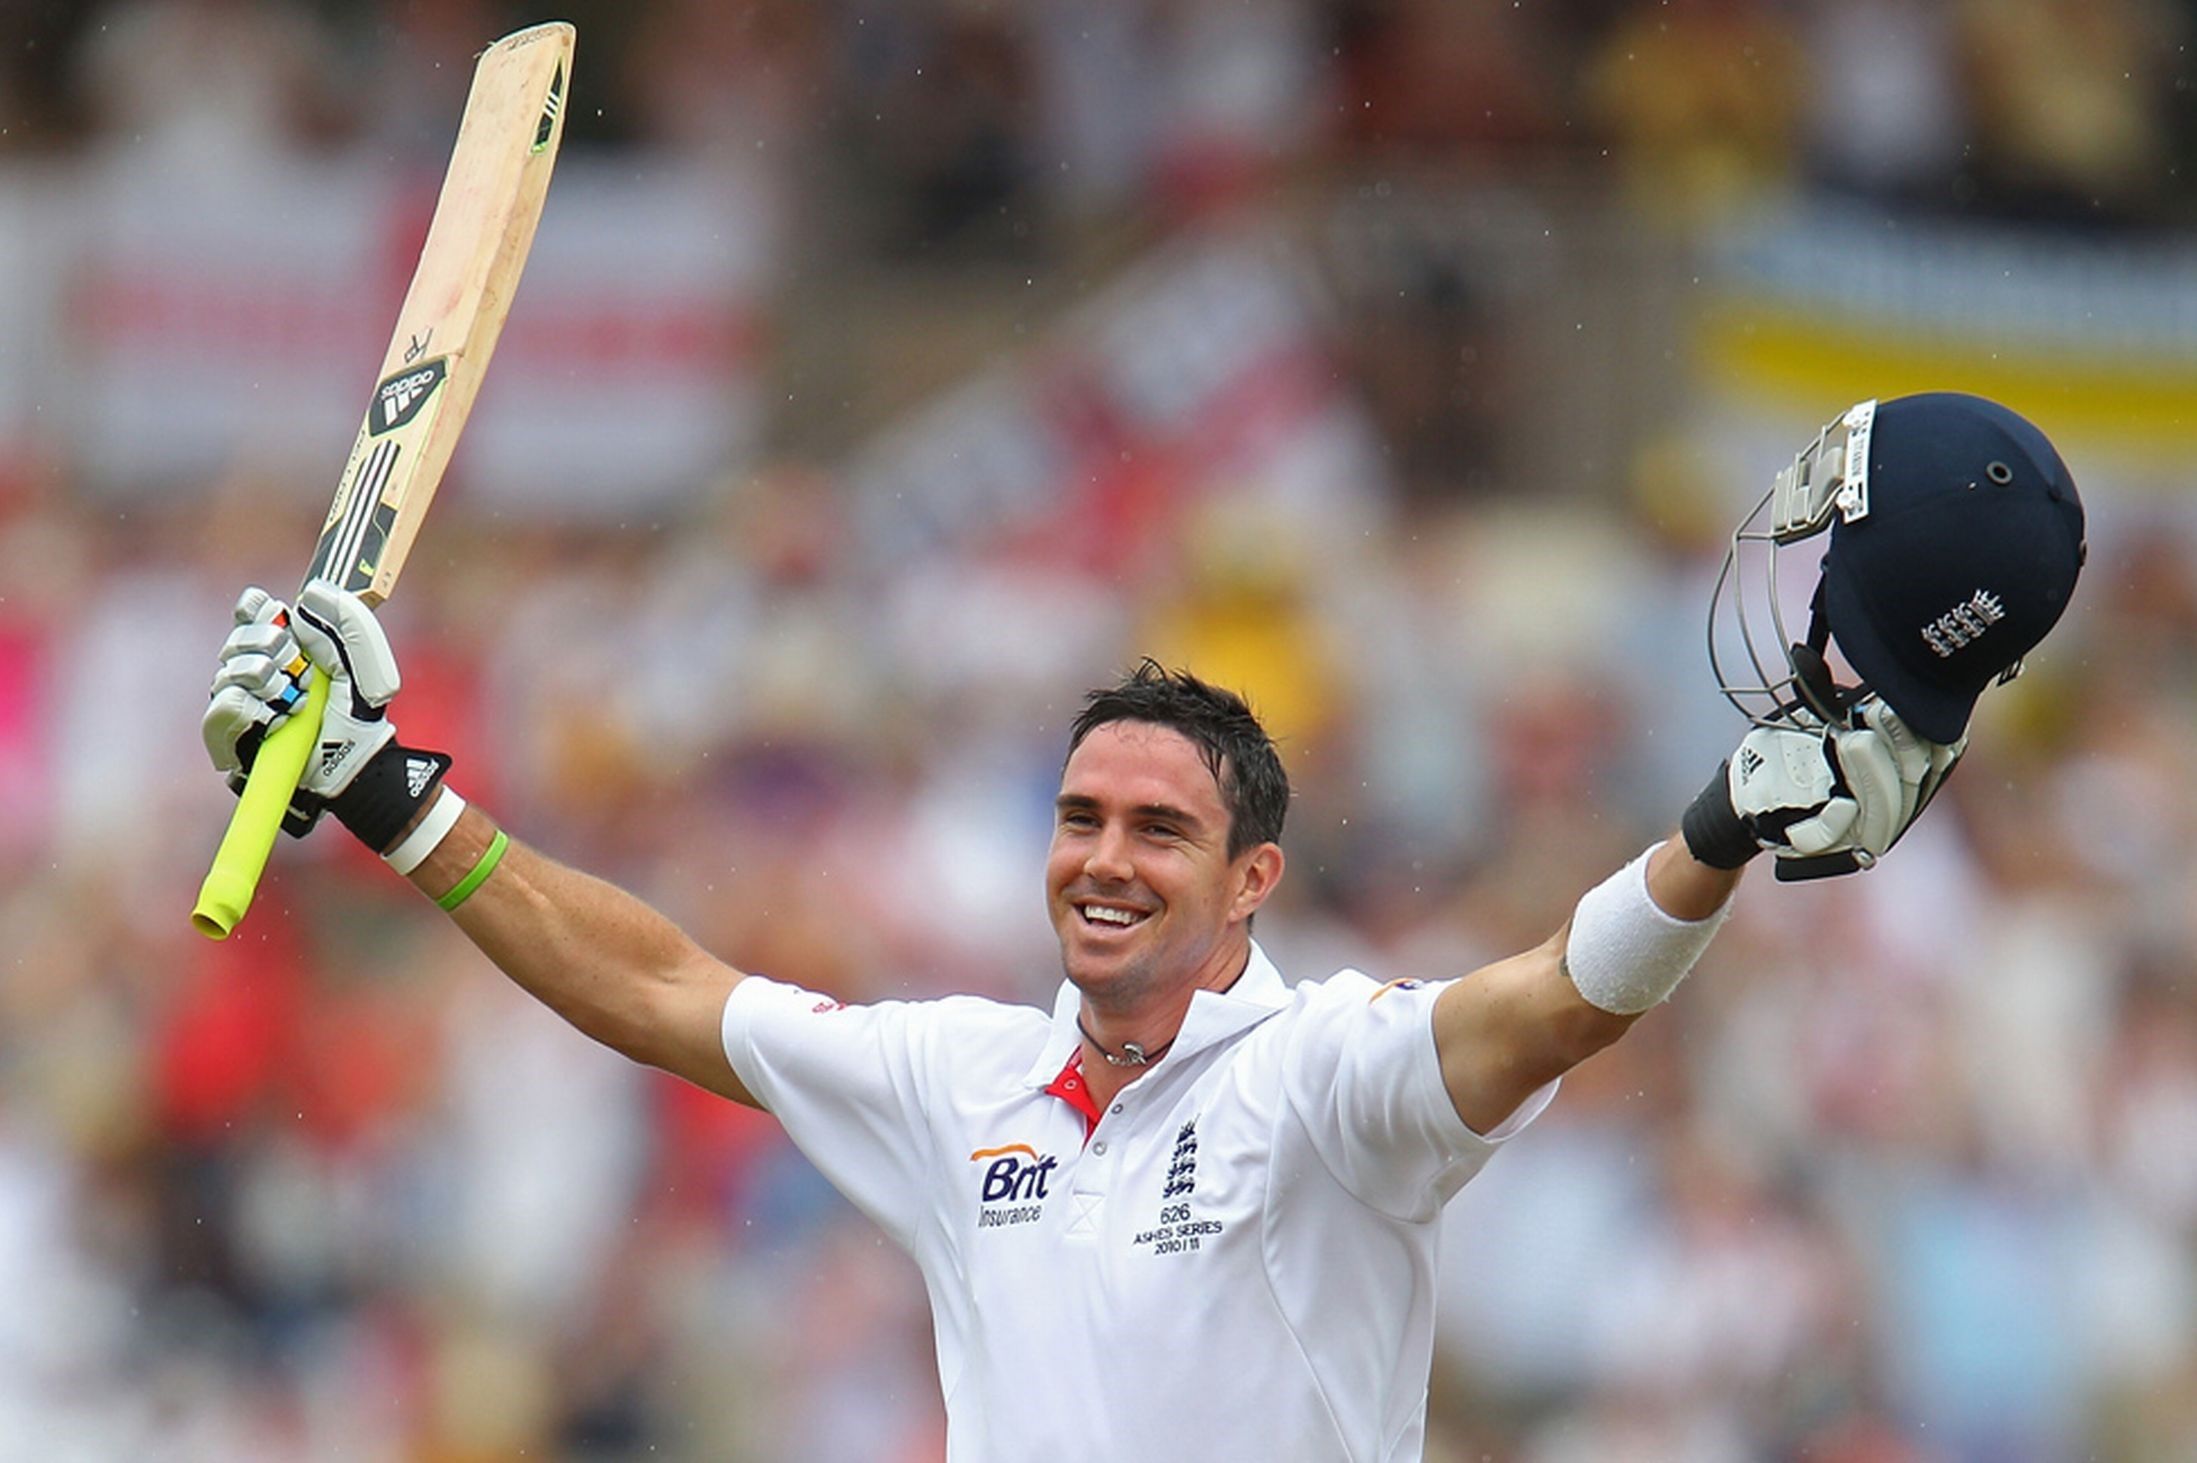 Kevin Pietersen England Cricket Player Celebrate after make Century in Test Wallpaper